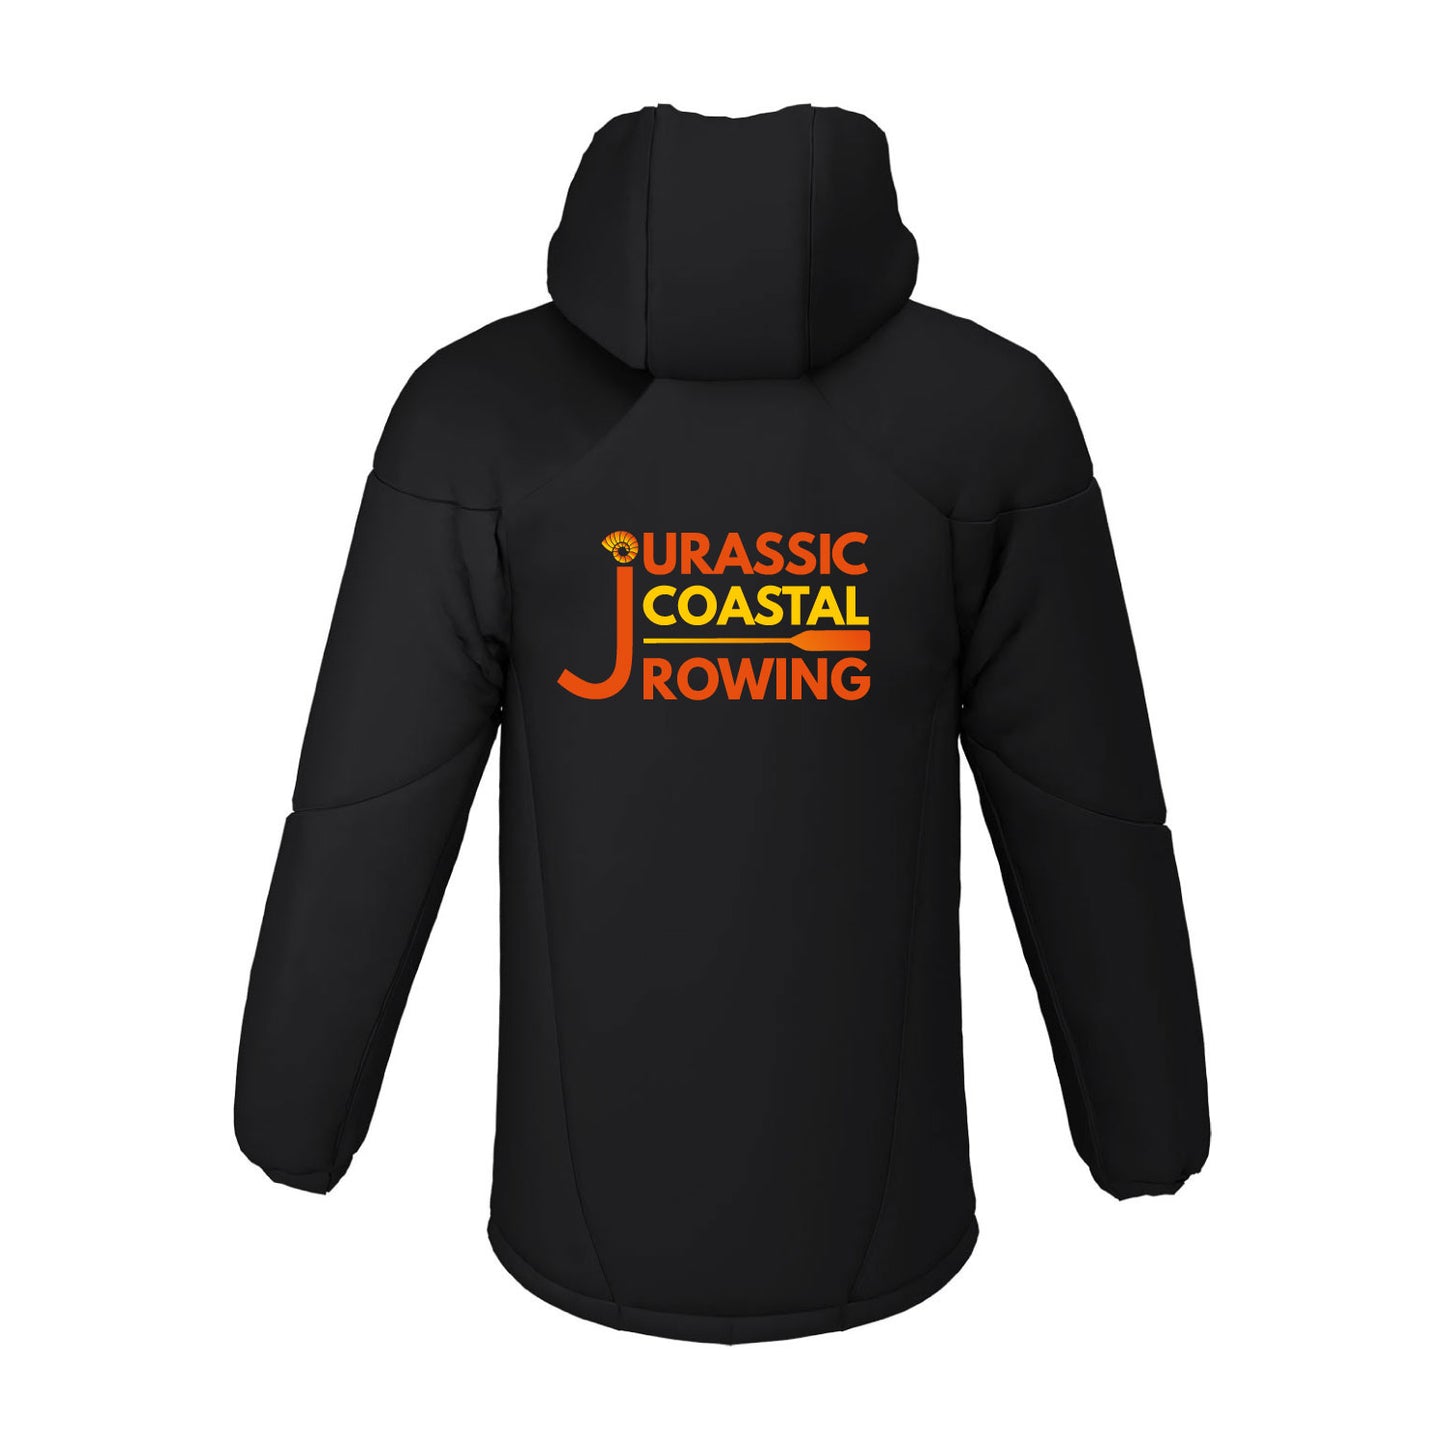 Jurassic Coastal Rowing Exmouth Contoured Thermal Jacket